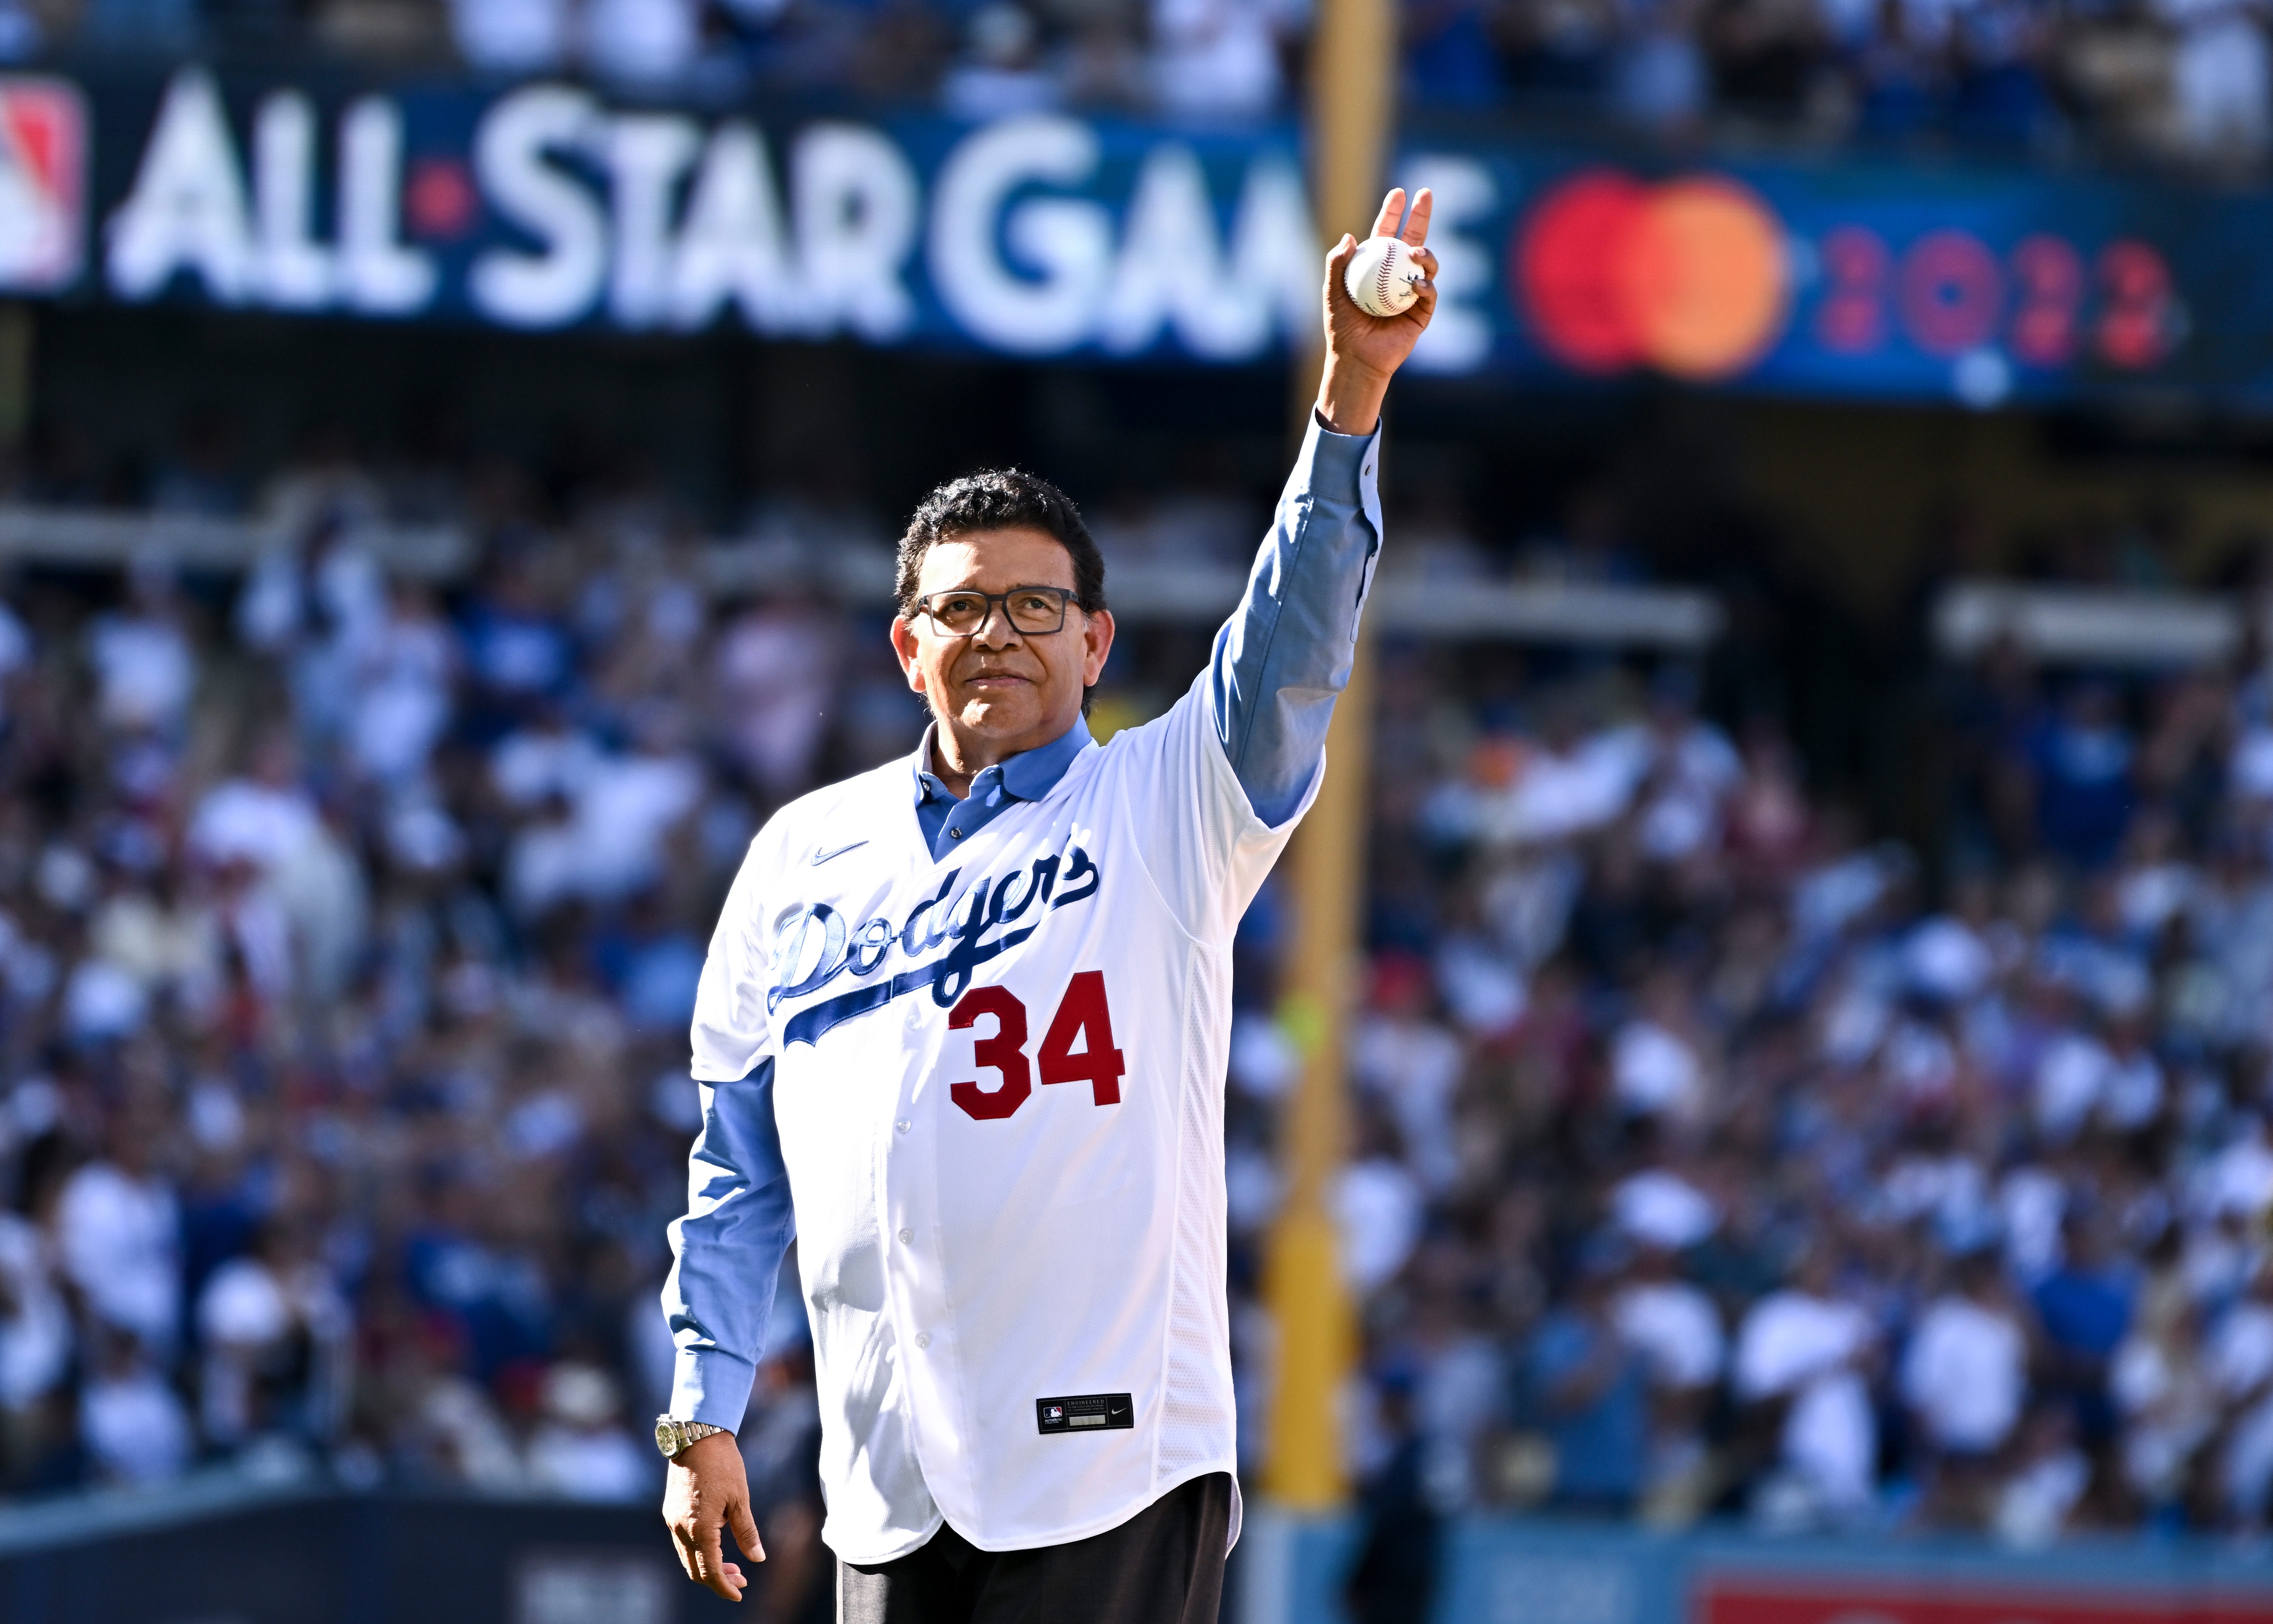 Los Angeles Dodgers rookie Fernando Valenzuela pitches his third